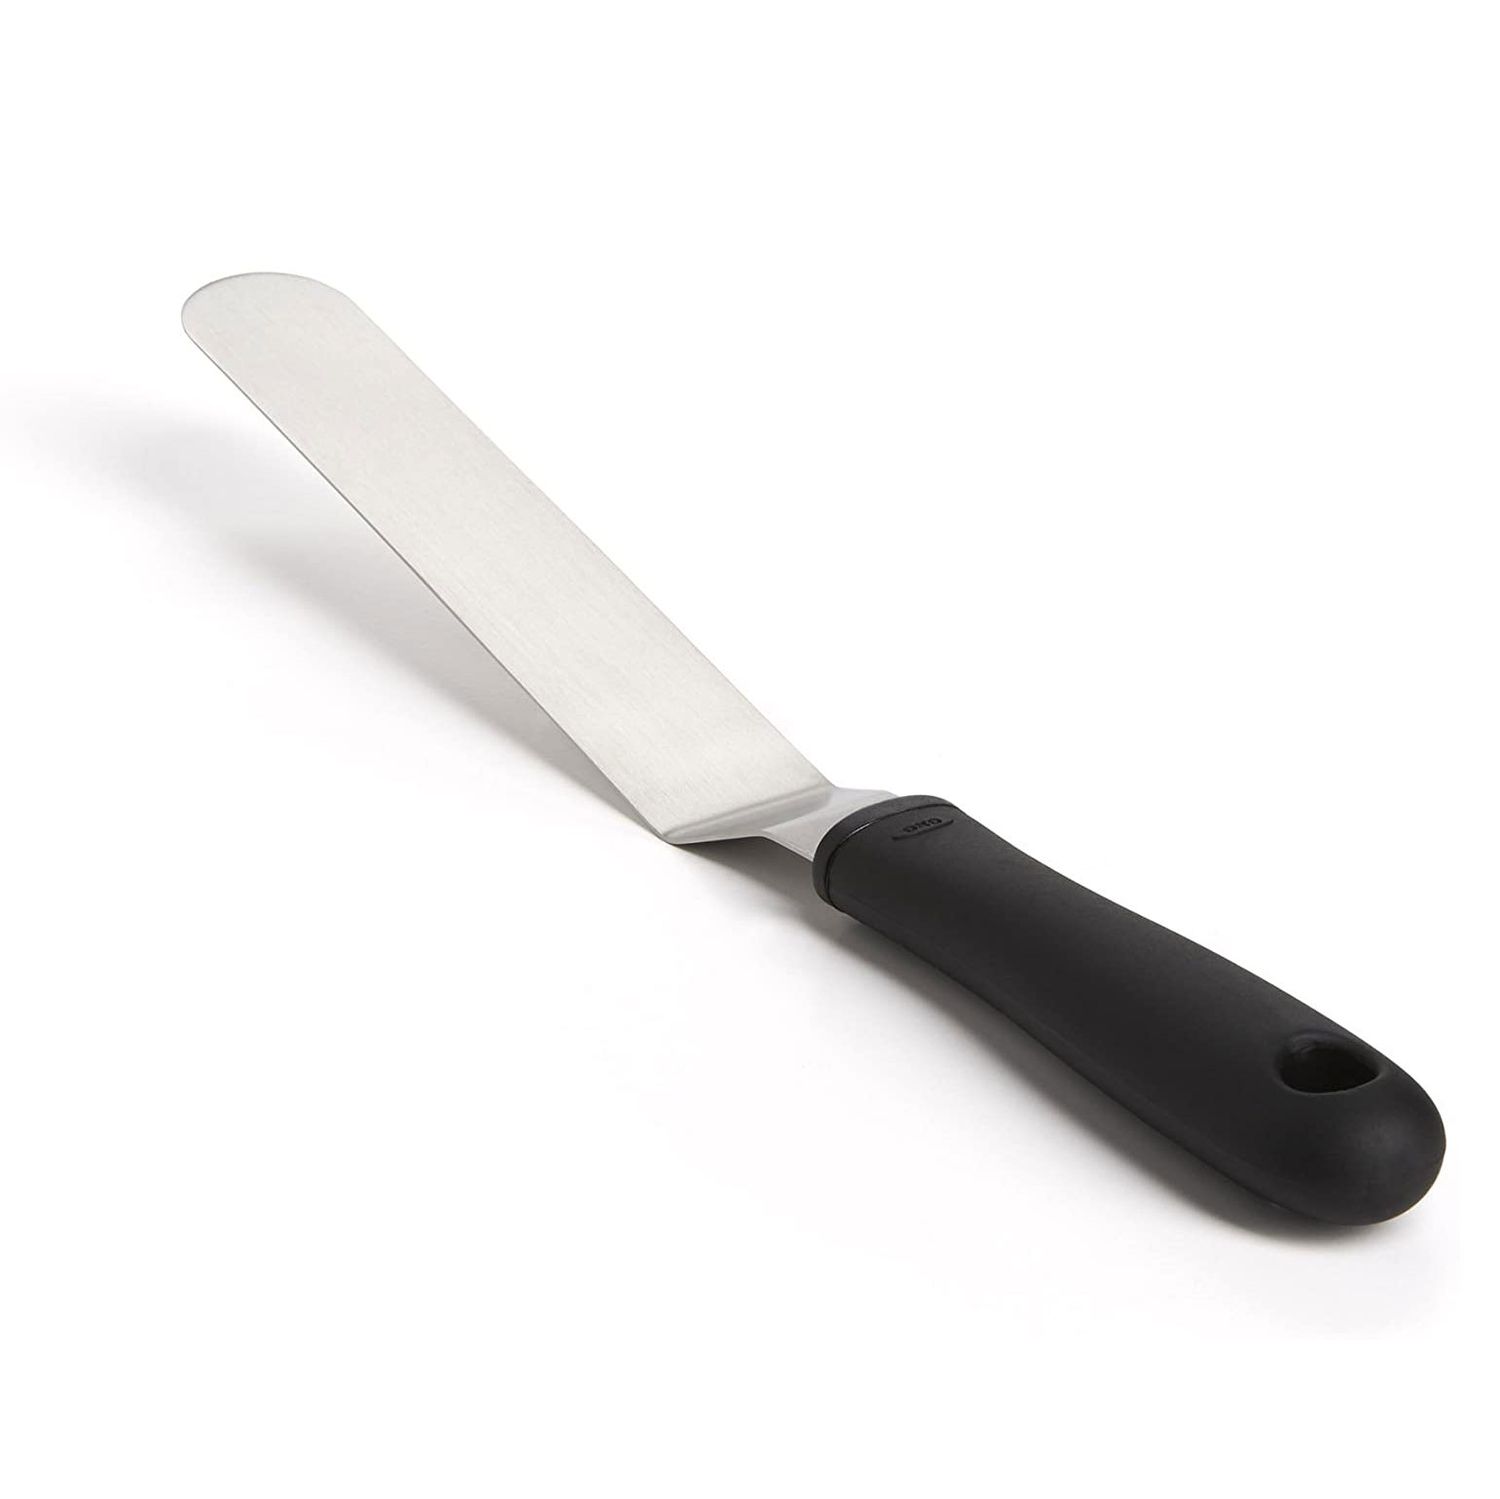 angled spatula with black handle